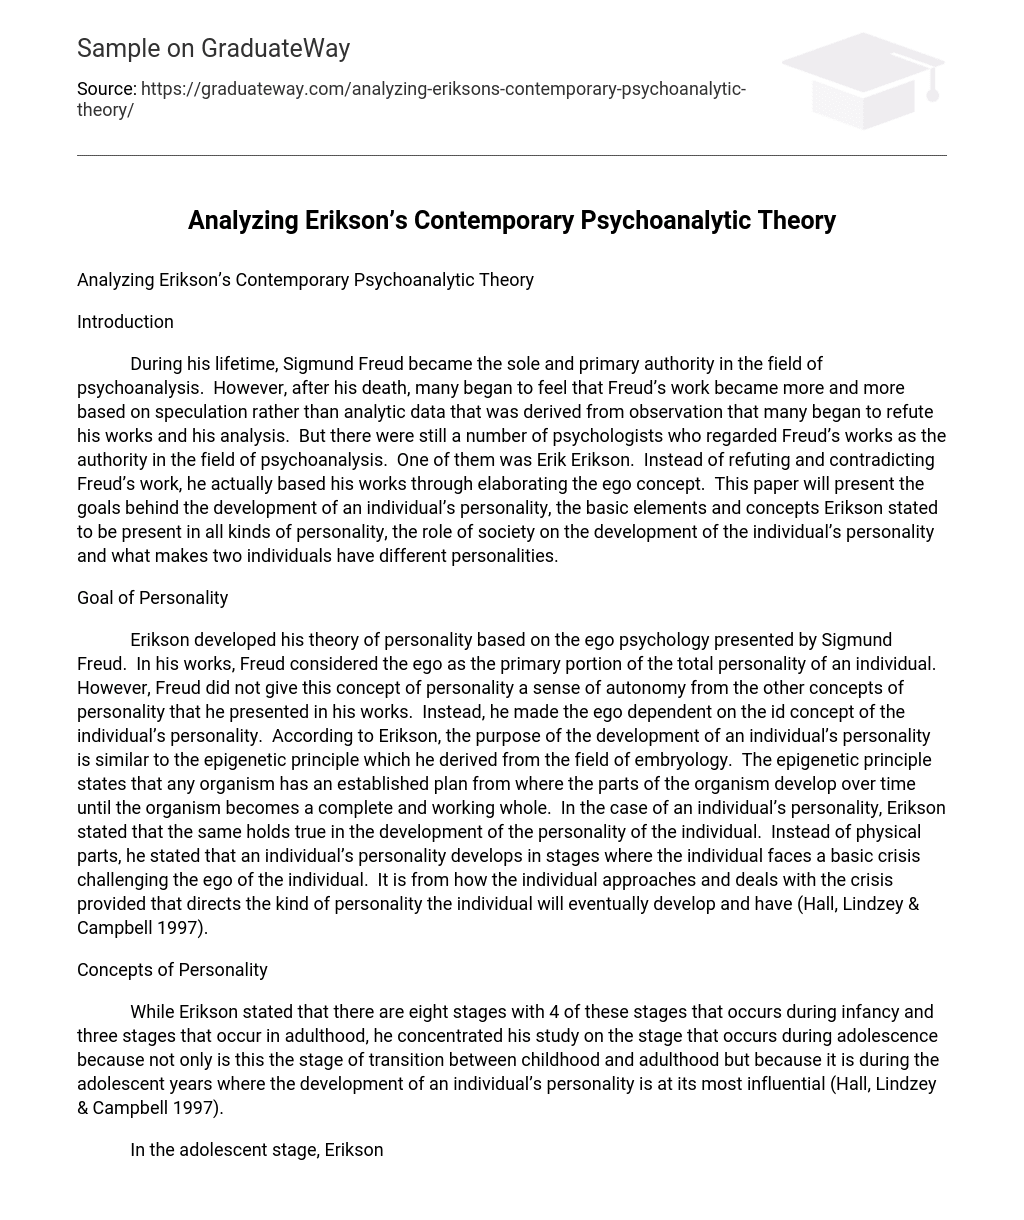 Analyzing Erikson’s Contemporary Psychoanalytic Theory Analysis